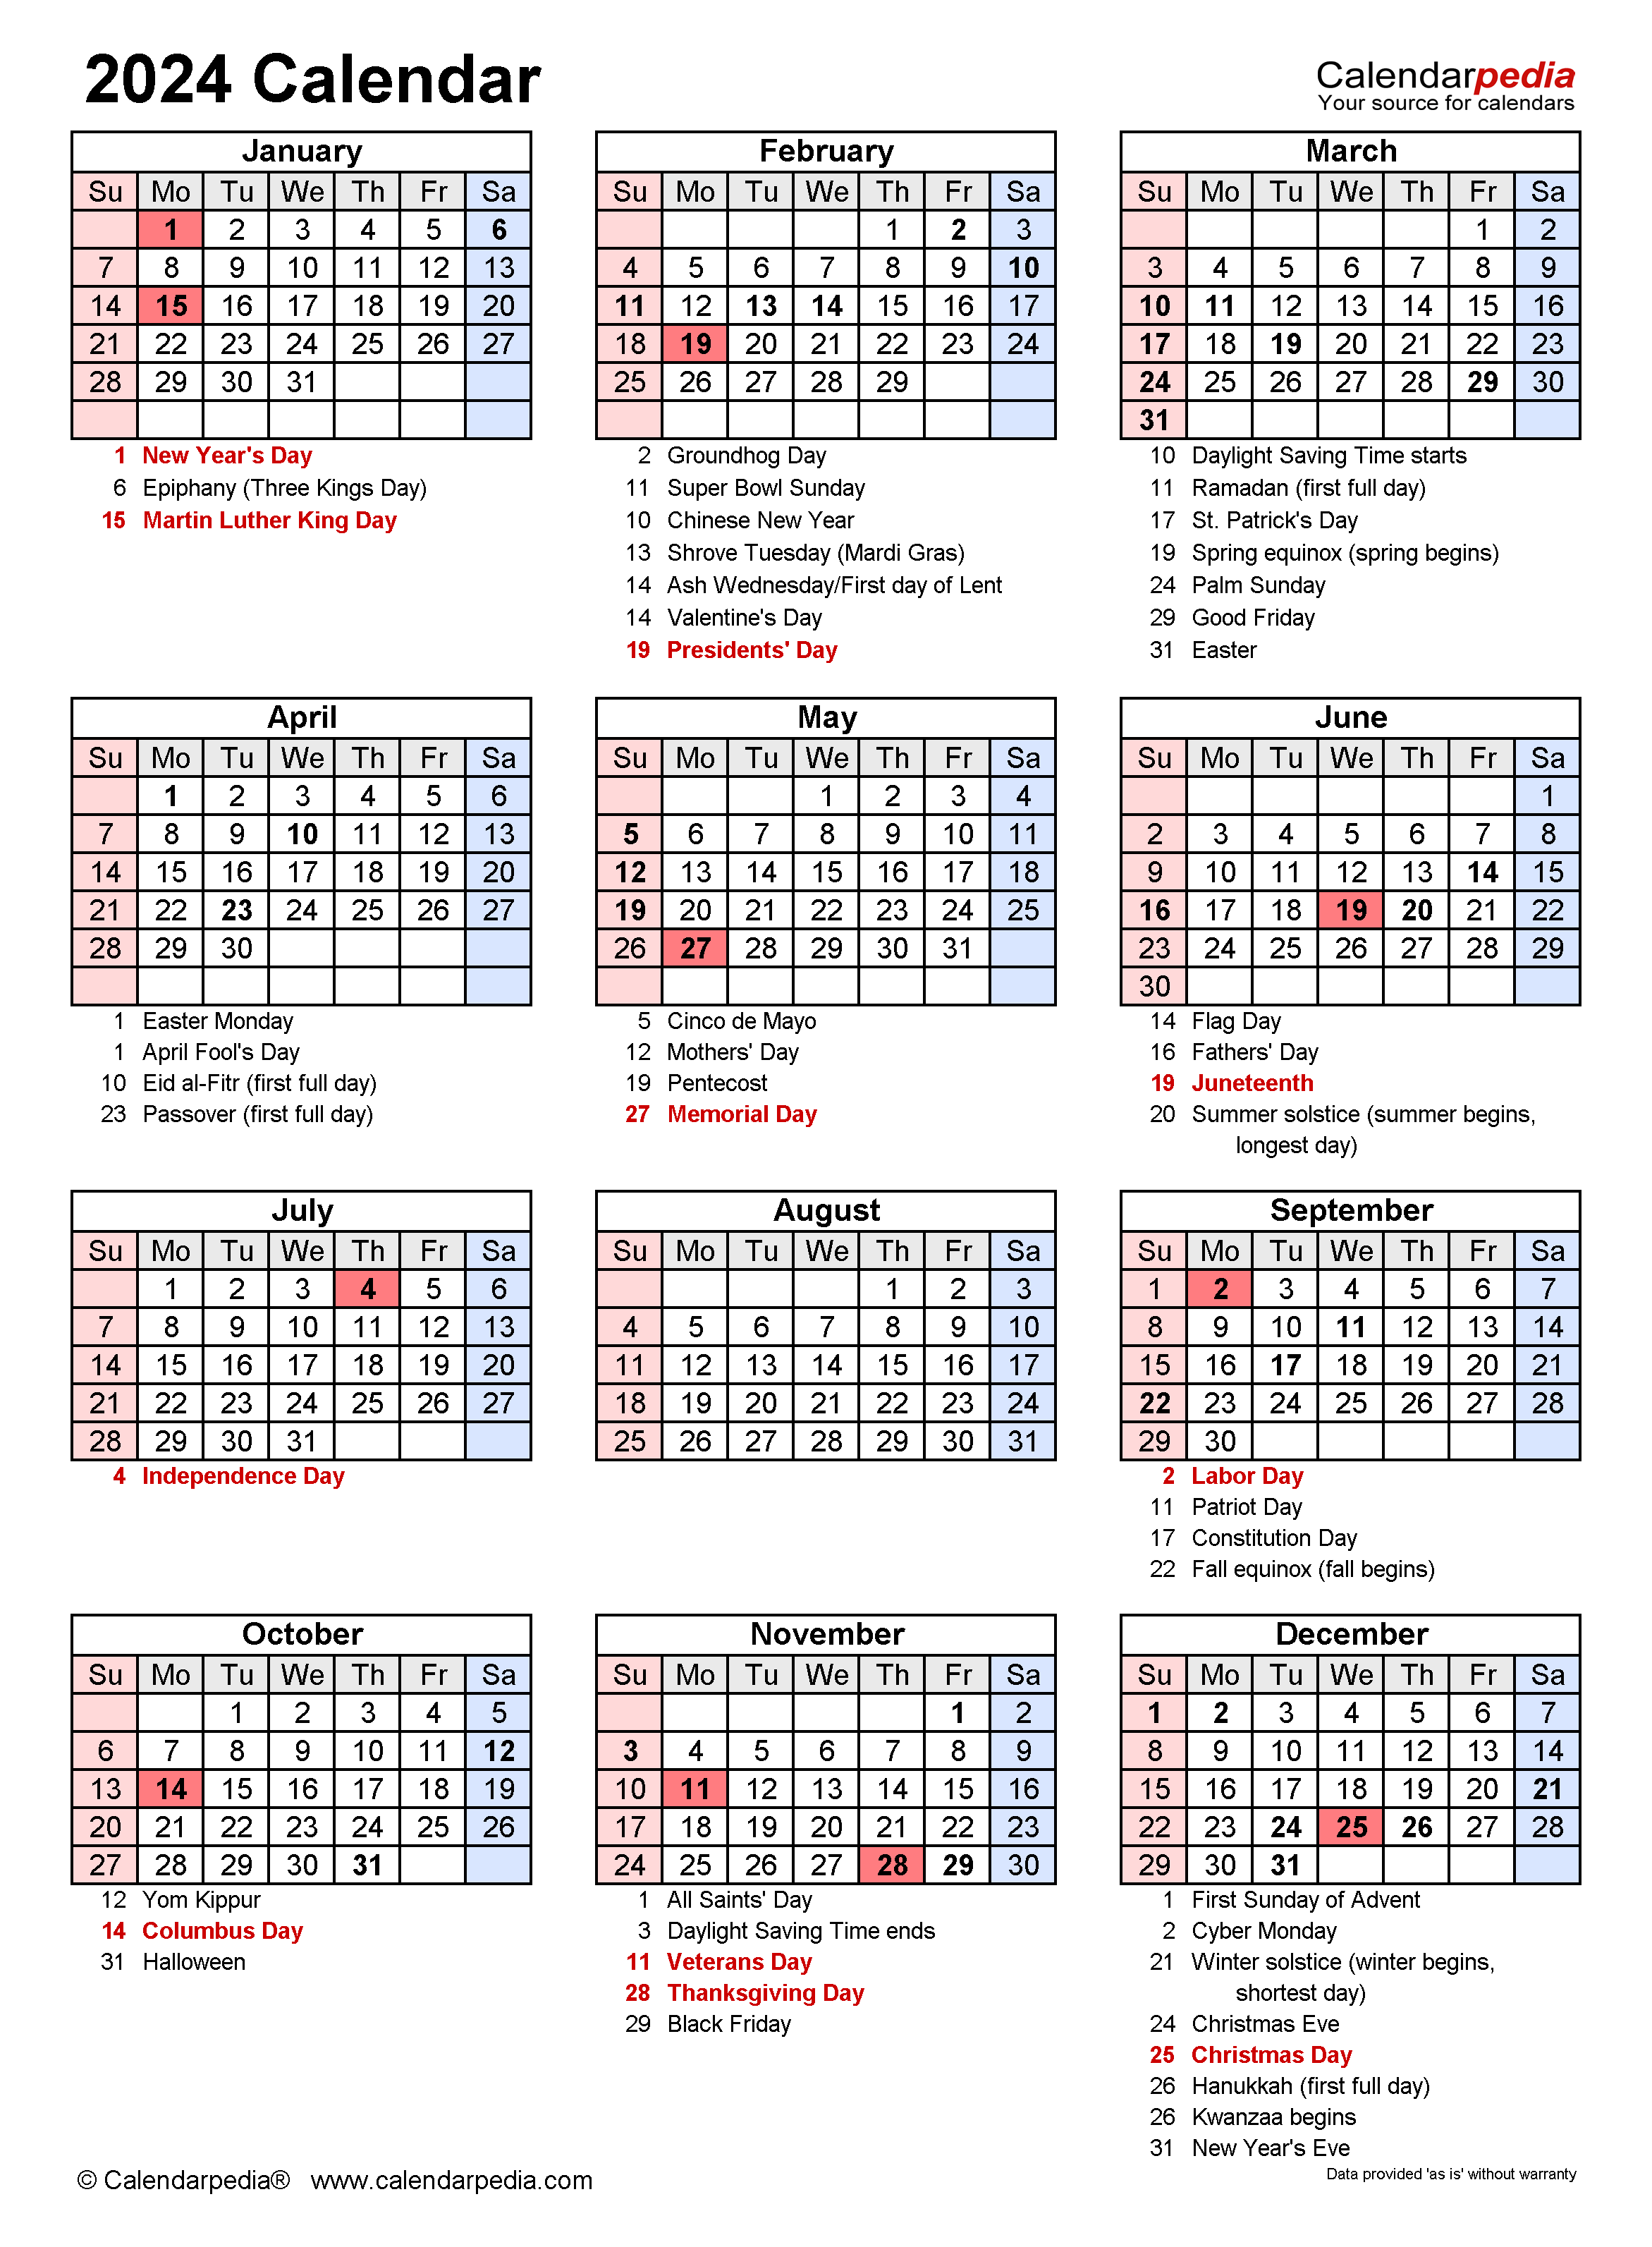 2024 Calendar Free Printable PDF Templates Calendarpedia - Free Printable 2024 Calendar With Holiday One Page Portrait